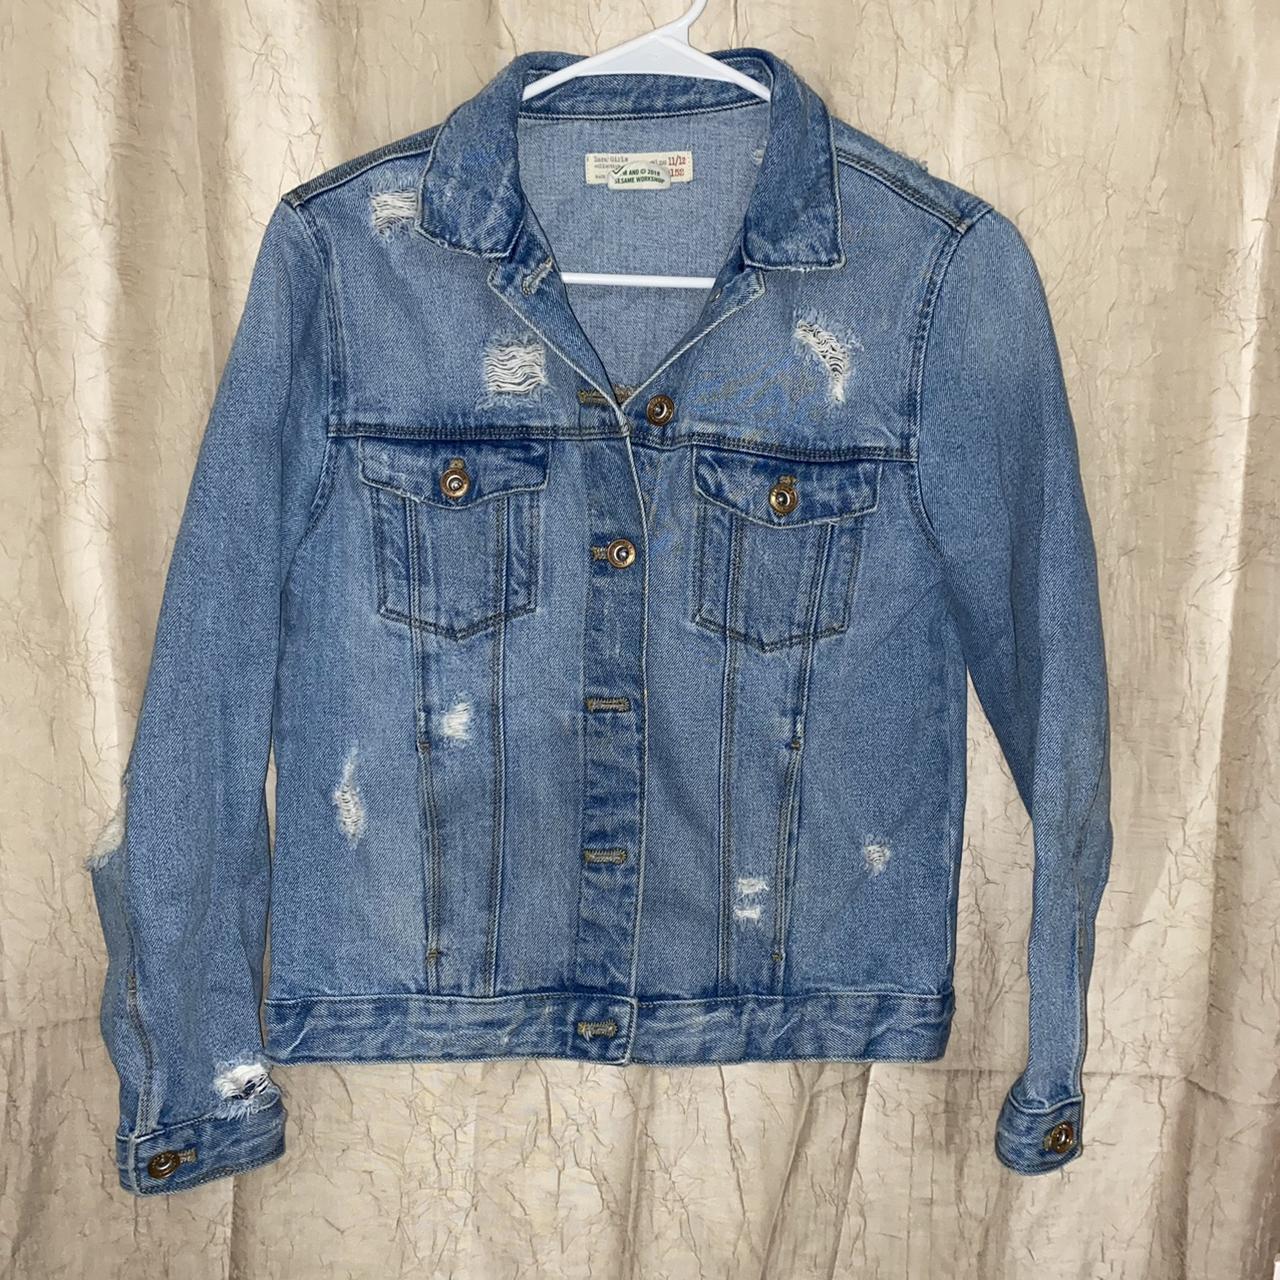 Ladies distressed denim jacket, Zara trafaluc denimwear, Medium | eBay